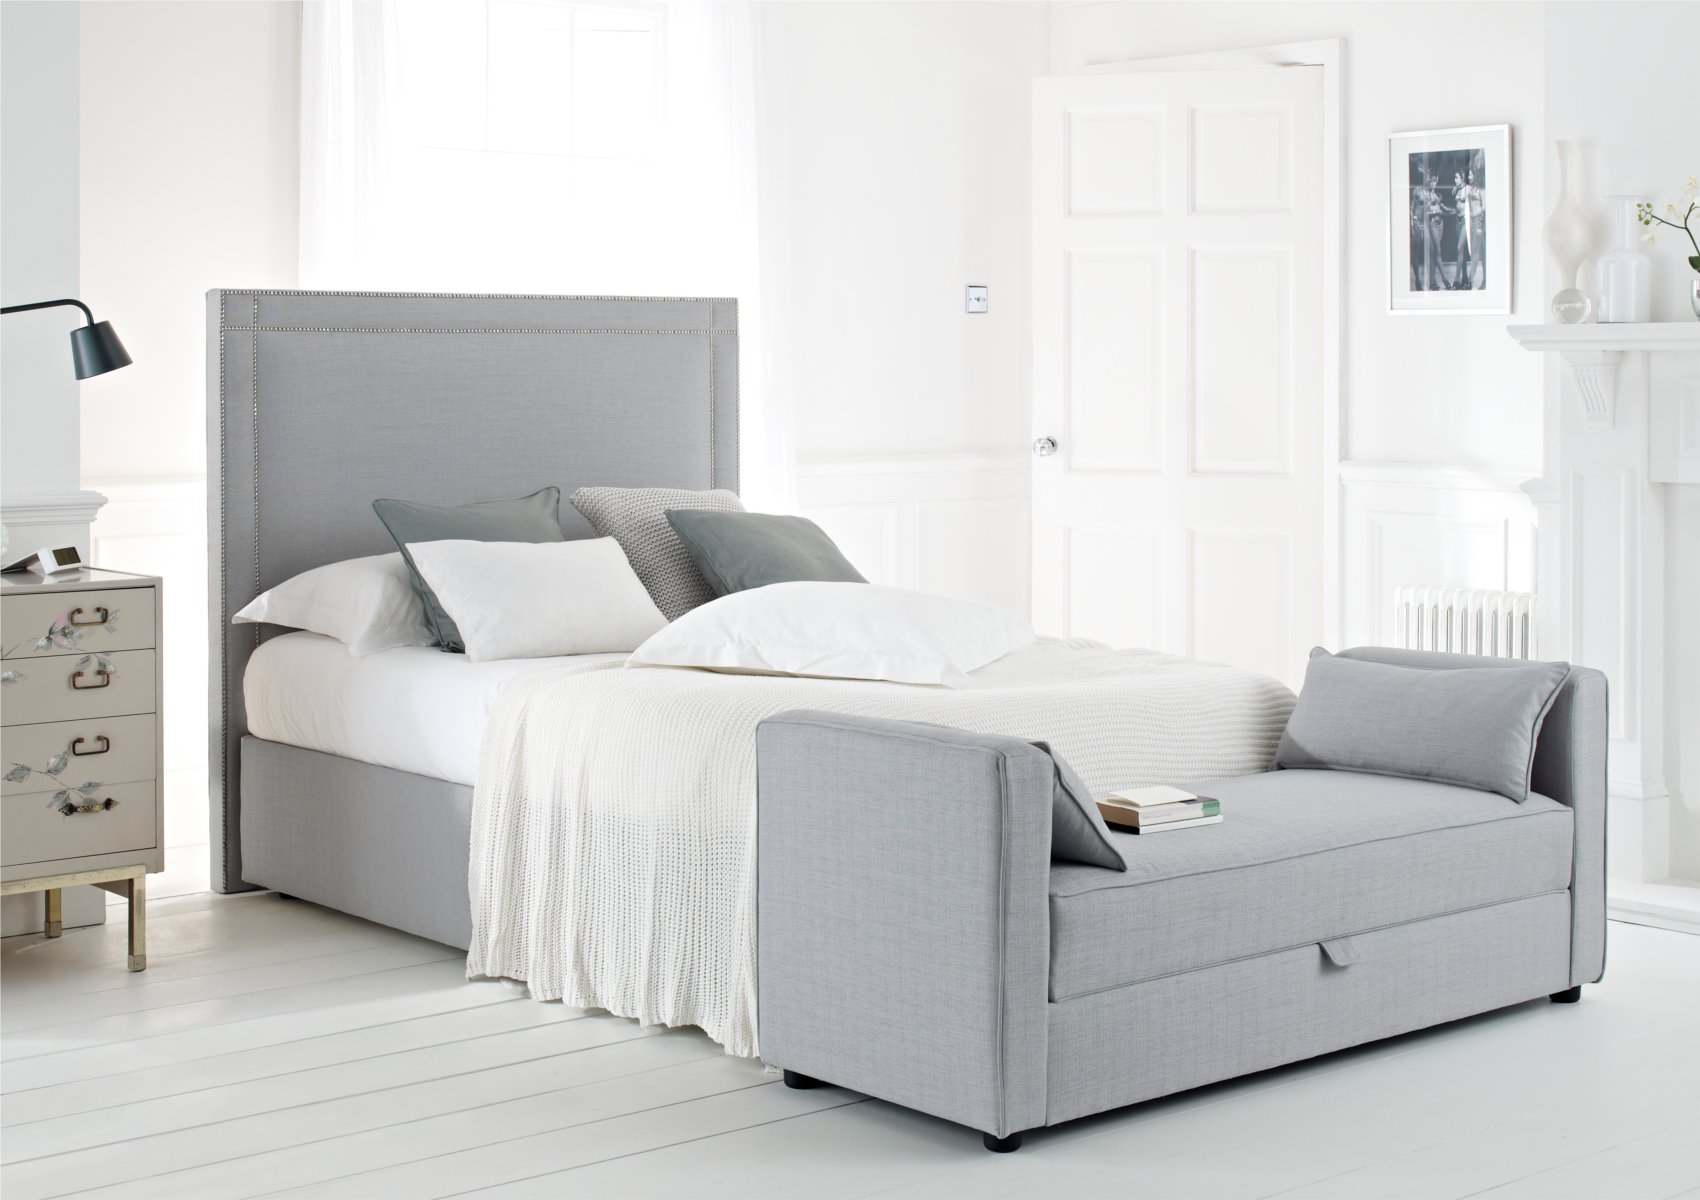 View Buckingham Harbour Grey Upholstered King Size Divan Bed Time4Sleep information